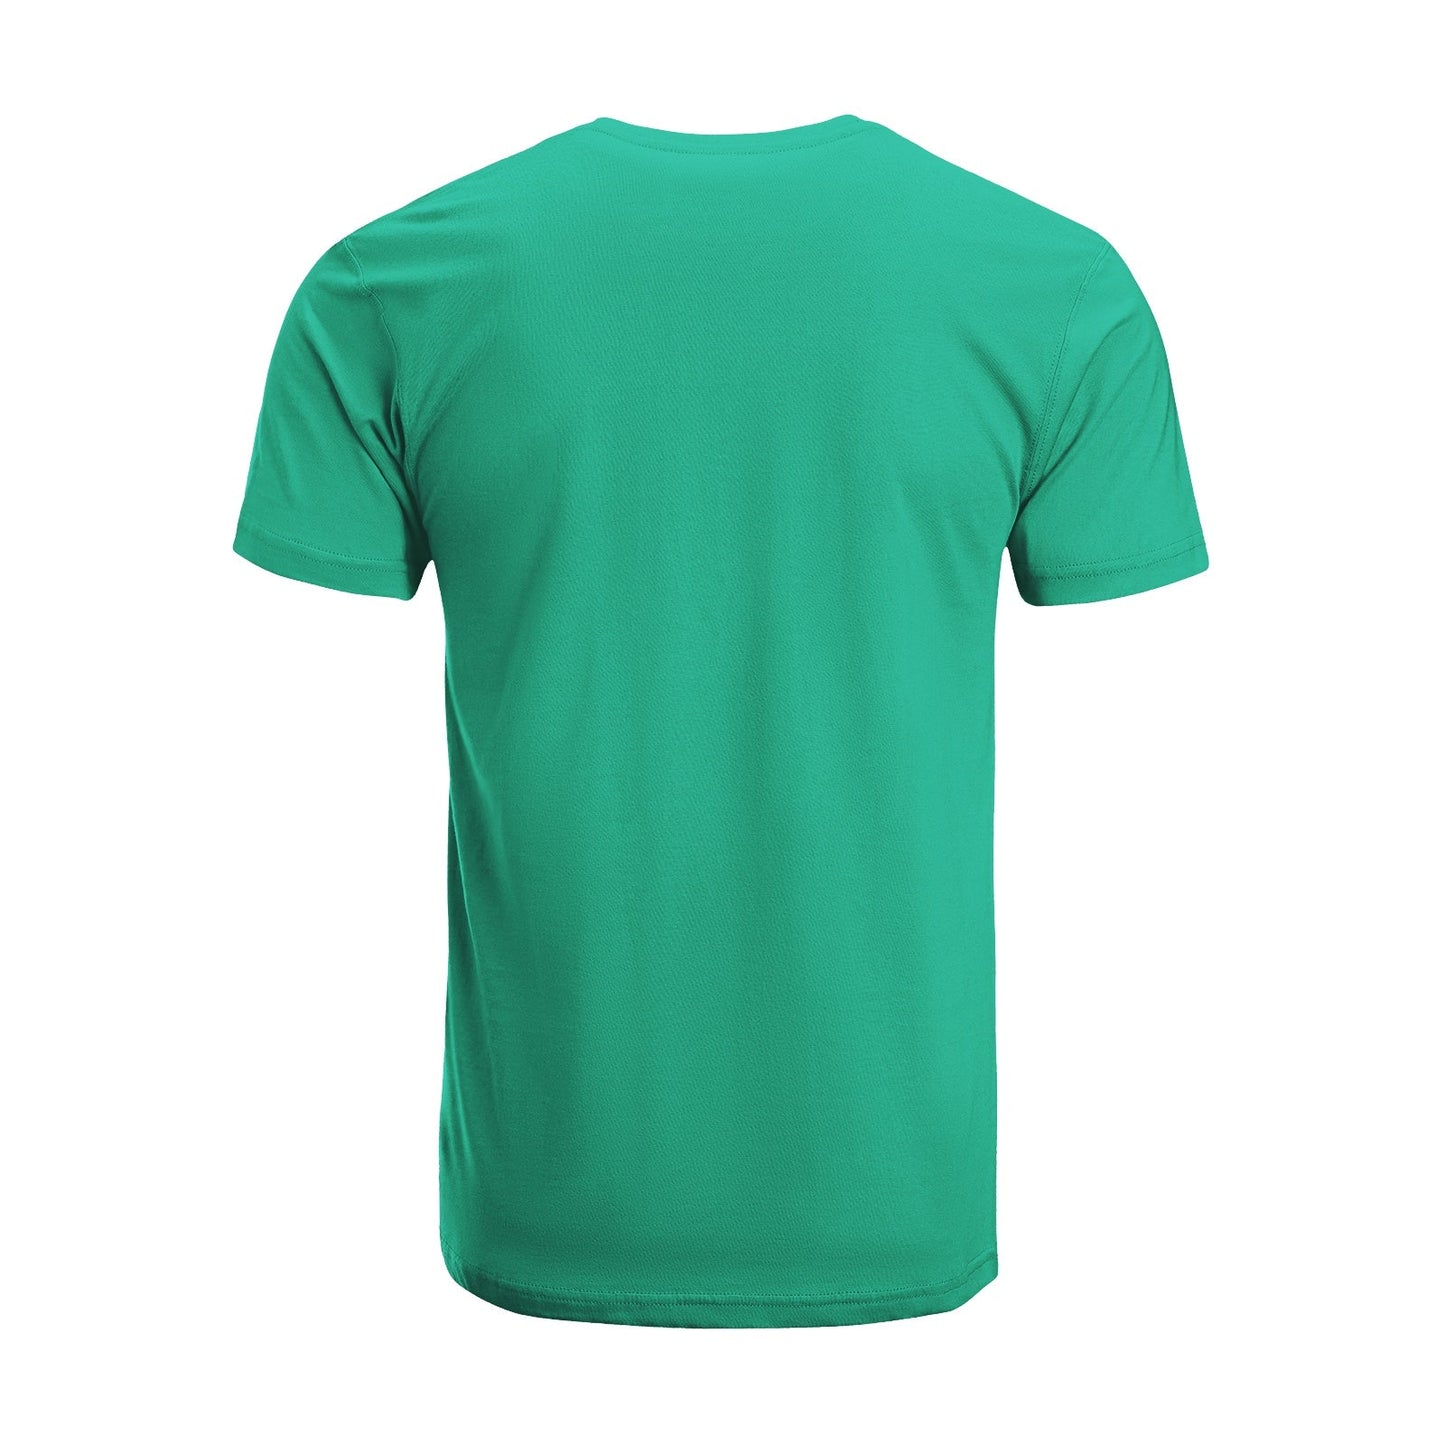 Unisex Short Sleeve Crew Neck Cotton Jersey T-Shirt DOG 48